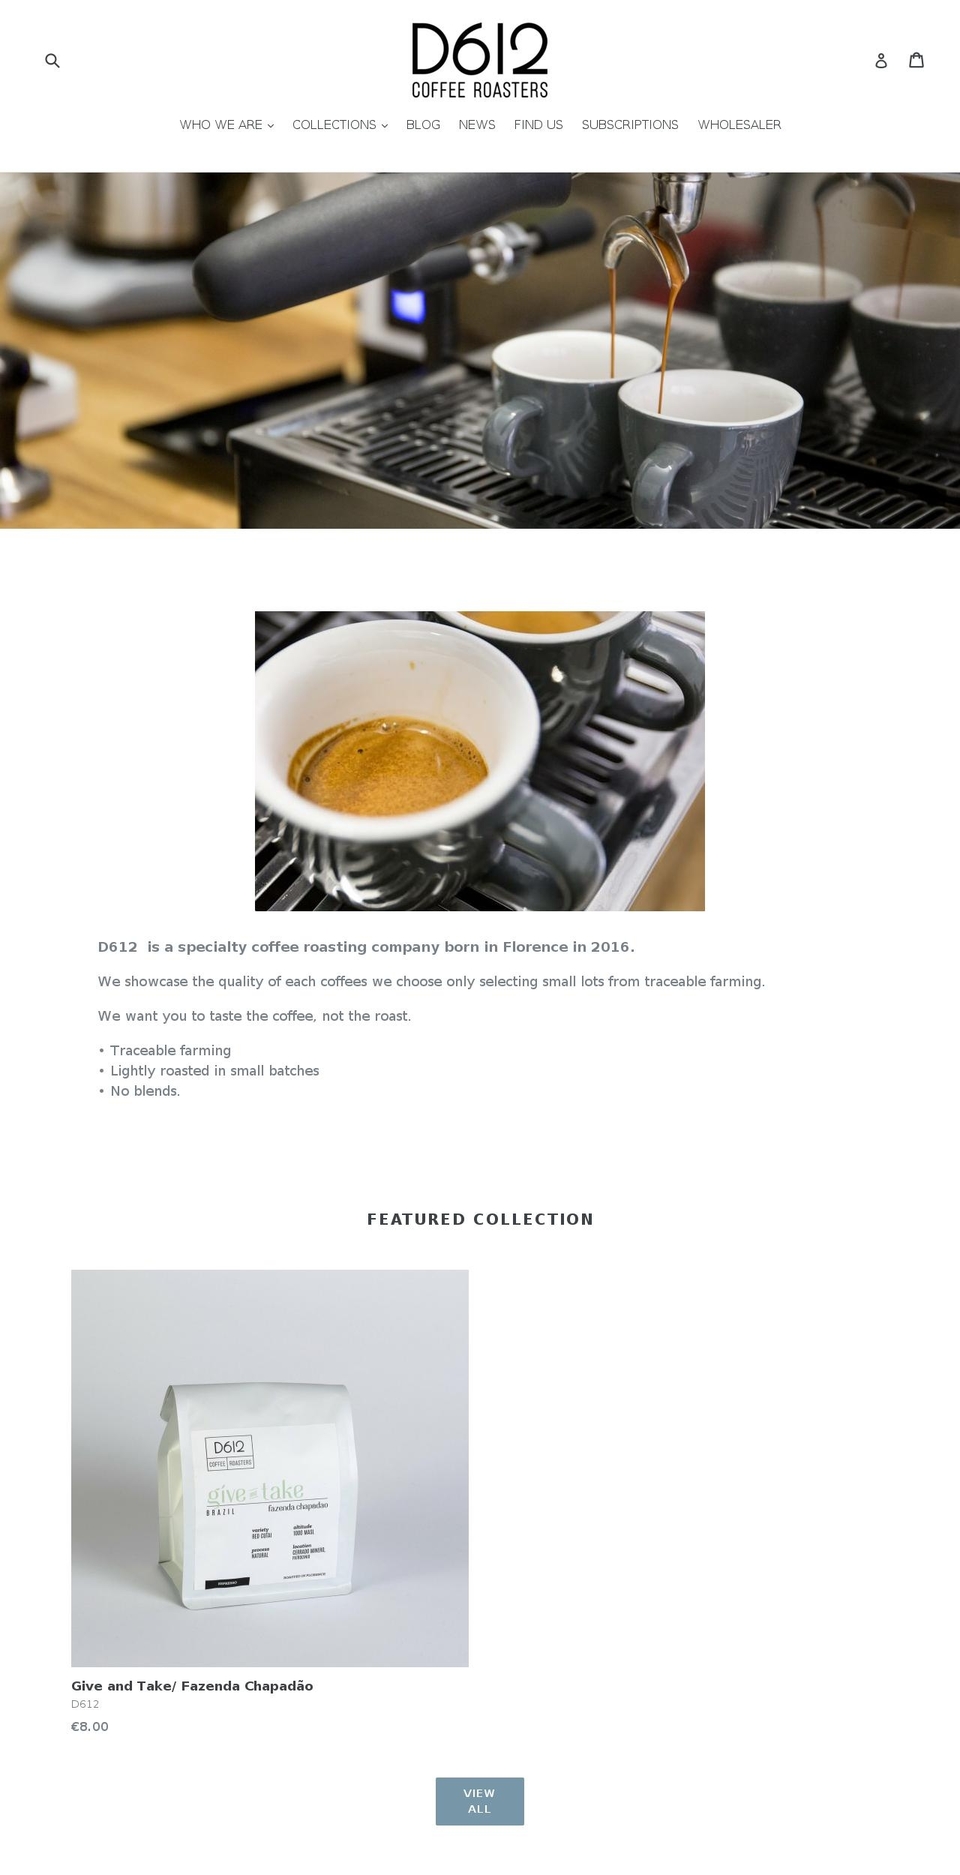 d612coffeeroasters.com shopify website screenshot